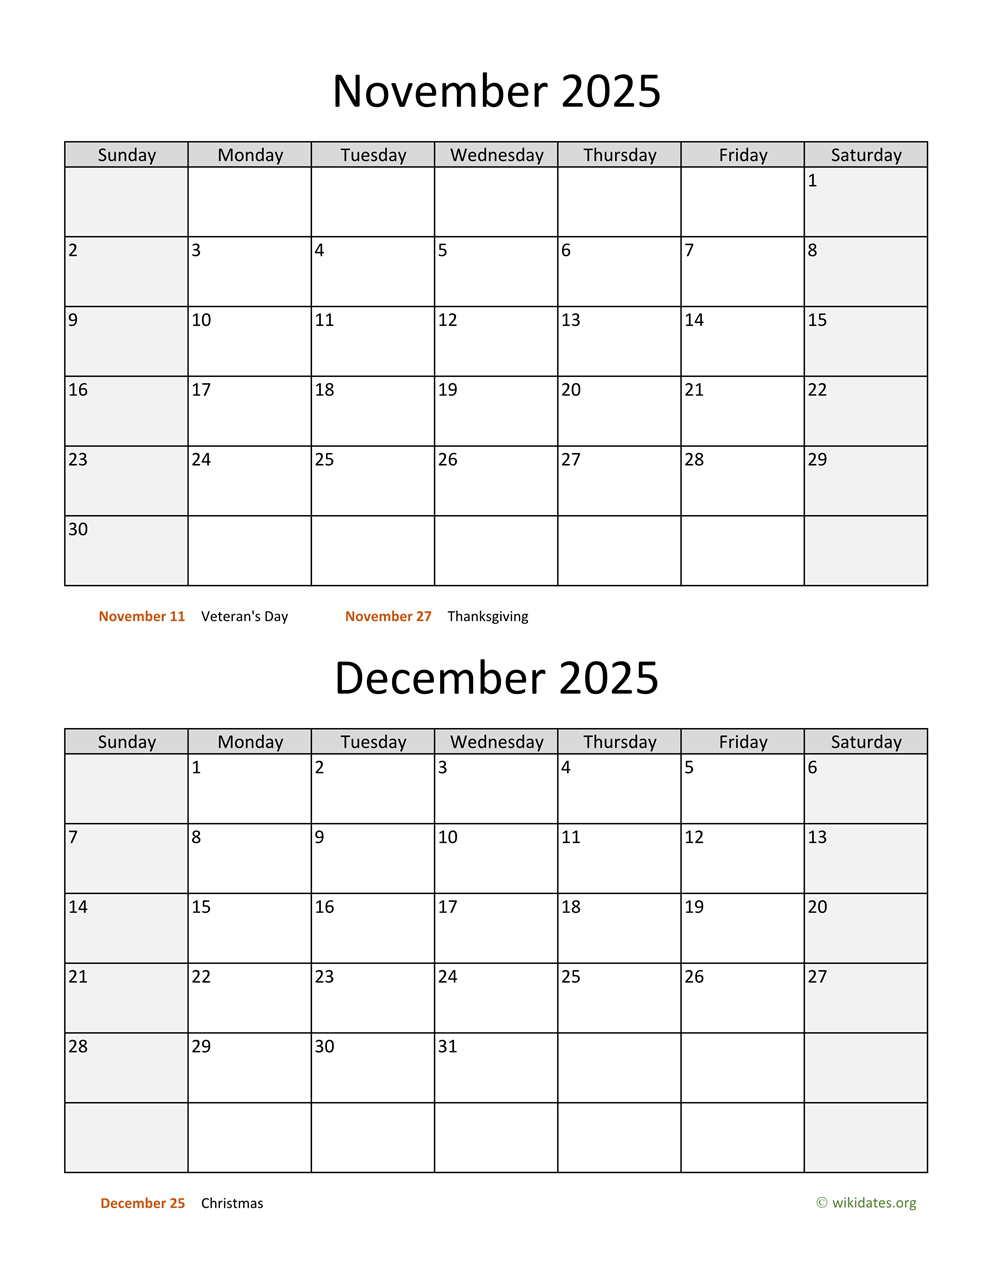 November and December 2025 Calendar  WikiDates.org